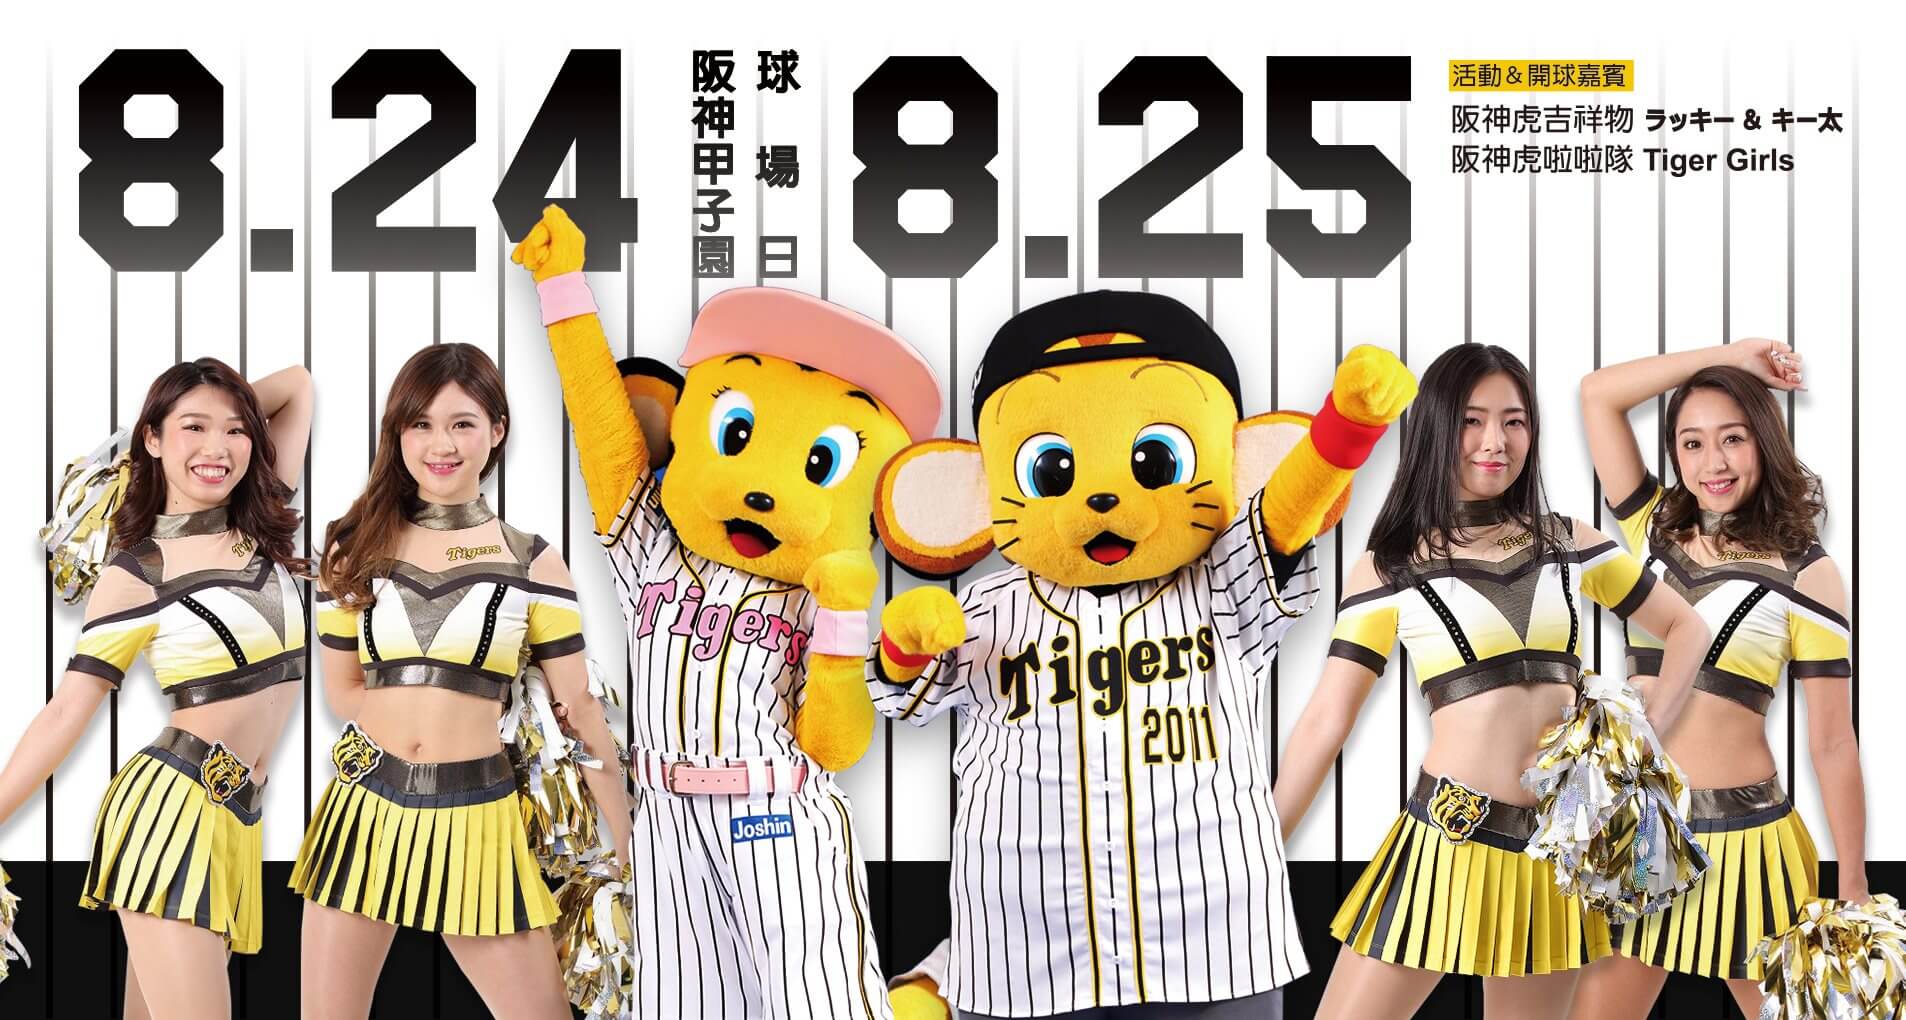 Big Enthusiasm- 阪神タイガースThe Hanshin Tigers 360 